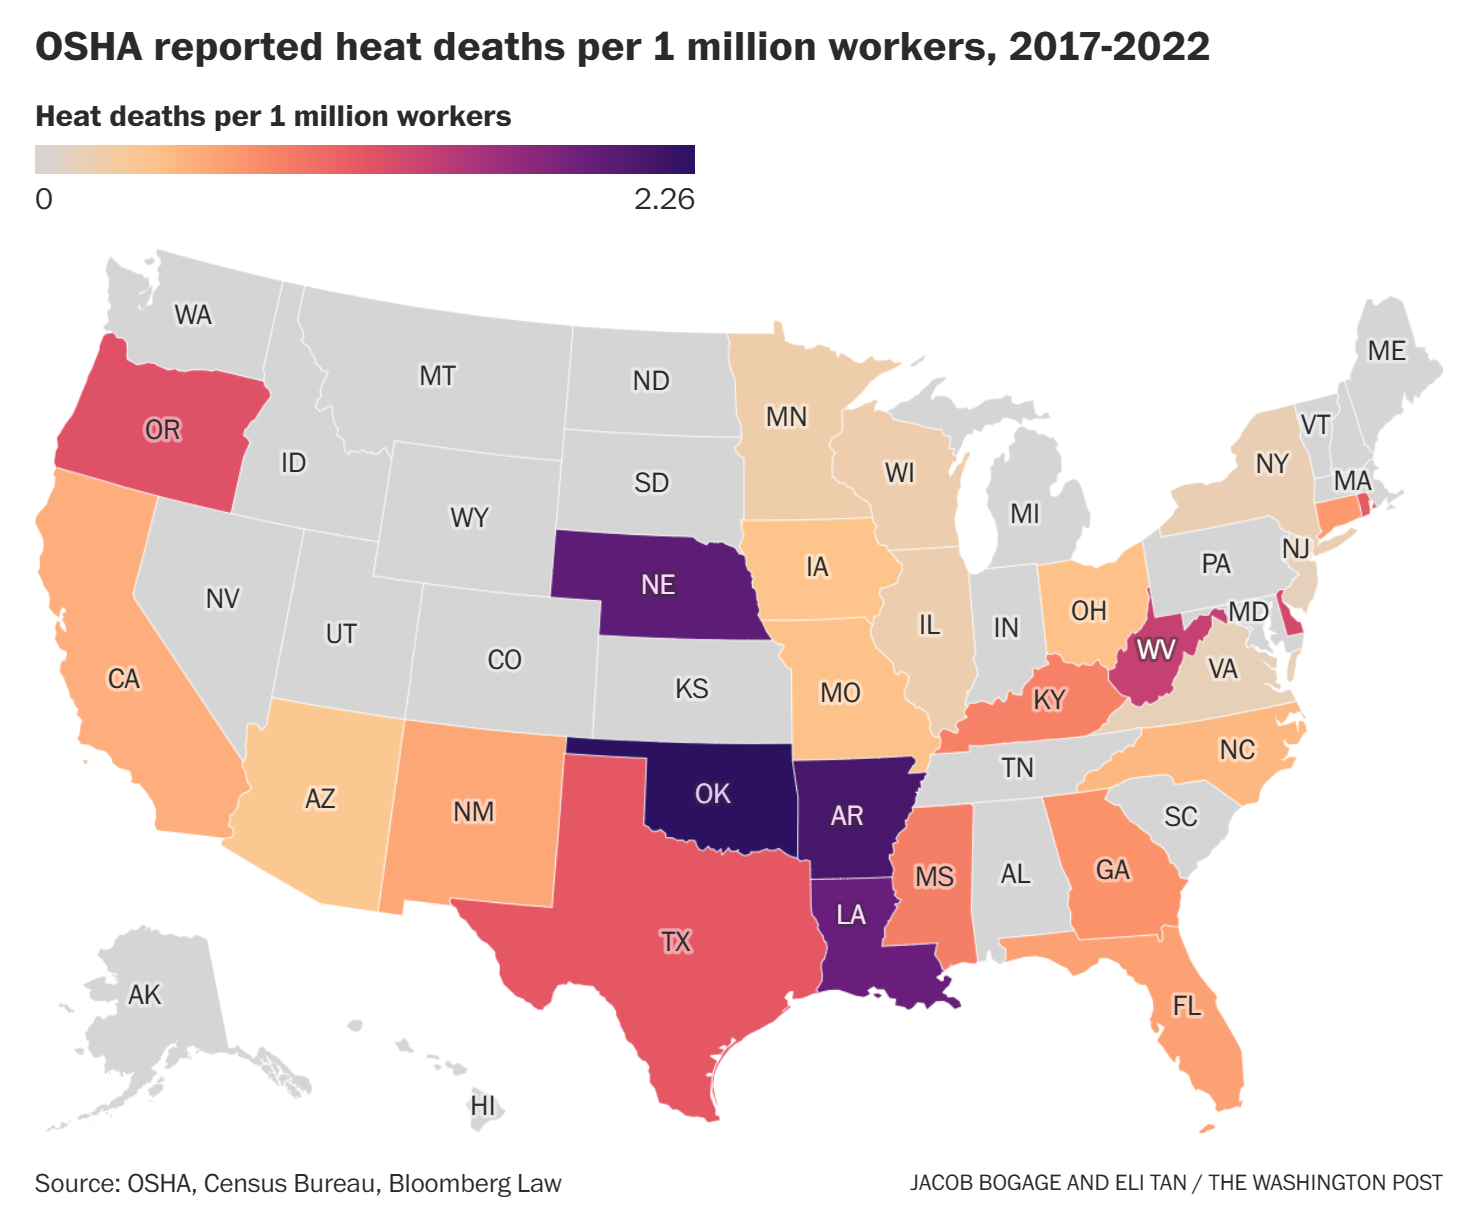 Map showing OSHA reported heat deaths per 1 million workers in the U.S., 2017-2022. Oklahoma and Arkansas had the highest death rates, at 2.26 / million and 2.1 / million, respectively. Data: OSHA / Census Bureau / Bloomberg Law. Graphic: Jacob Bogage and Eli Tan / The Washington Post